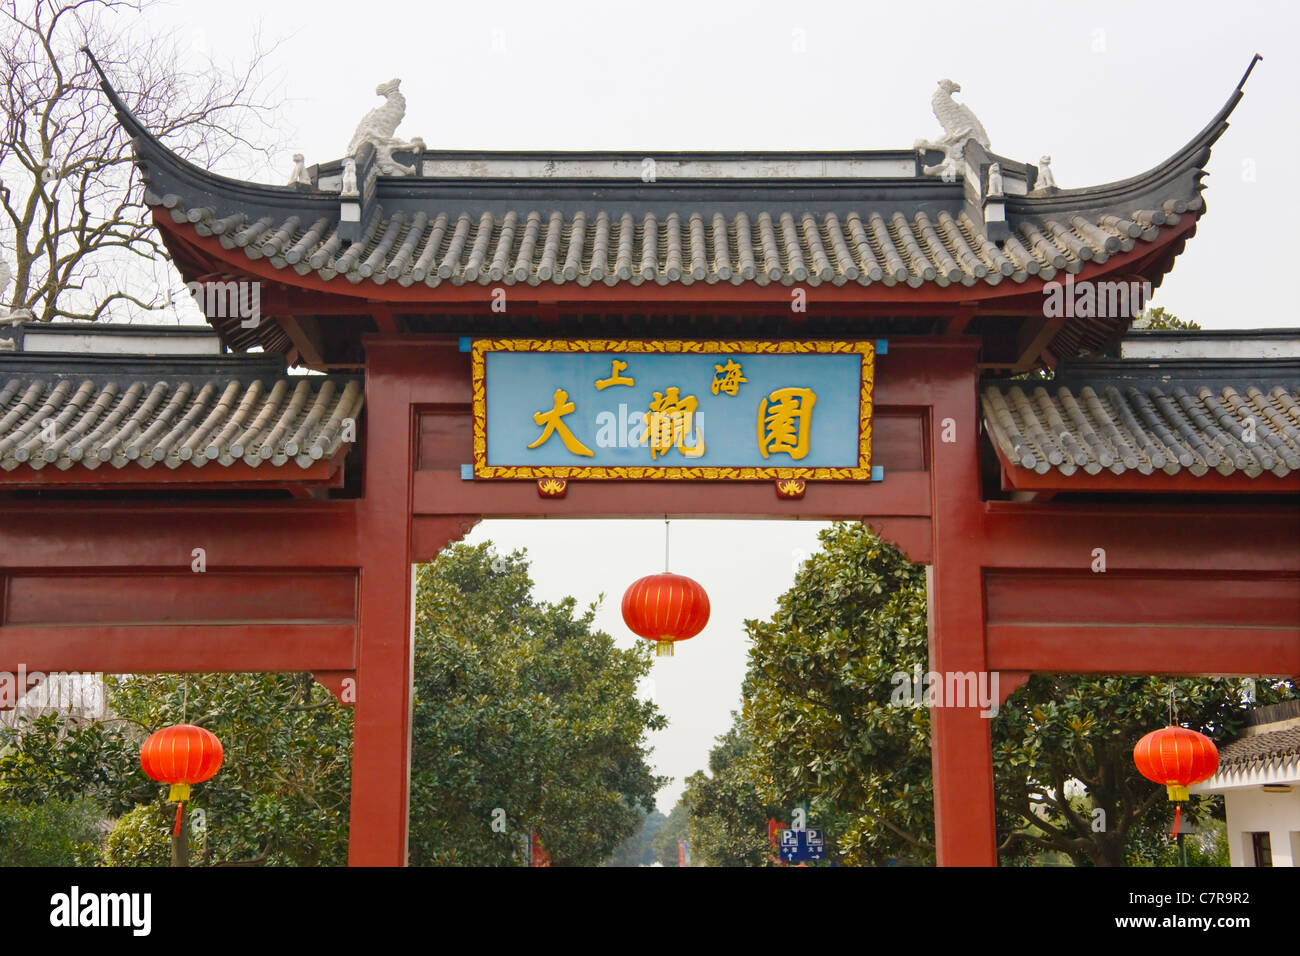 Arco tradicional, entrada al jardín Daguanyuan, Shanghai, China Foto de stock